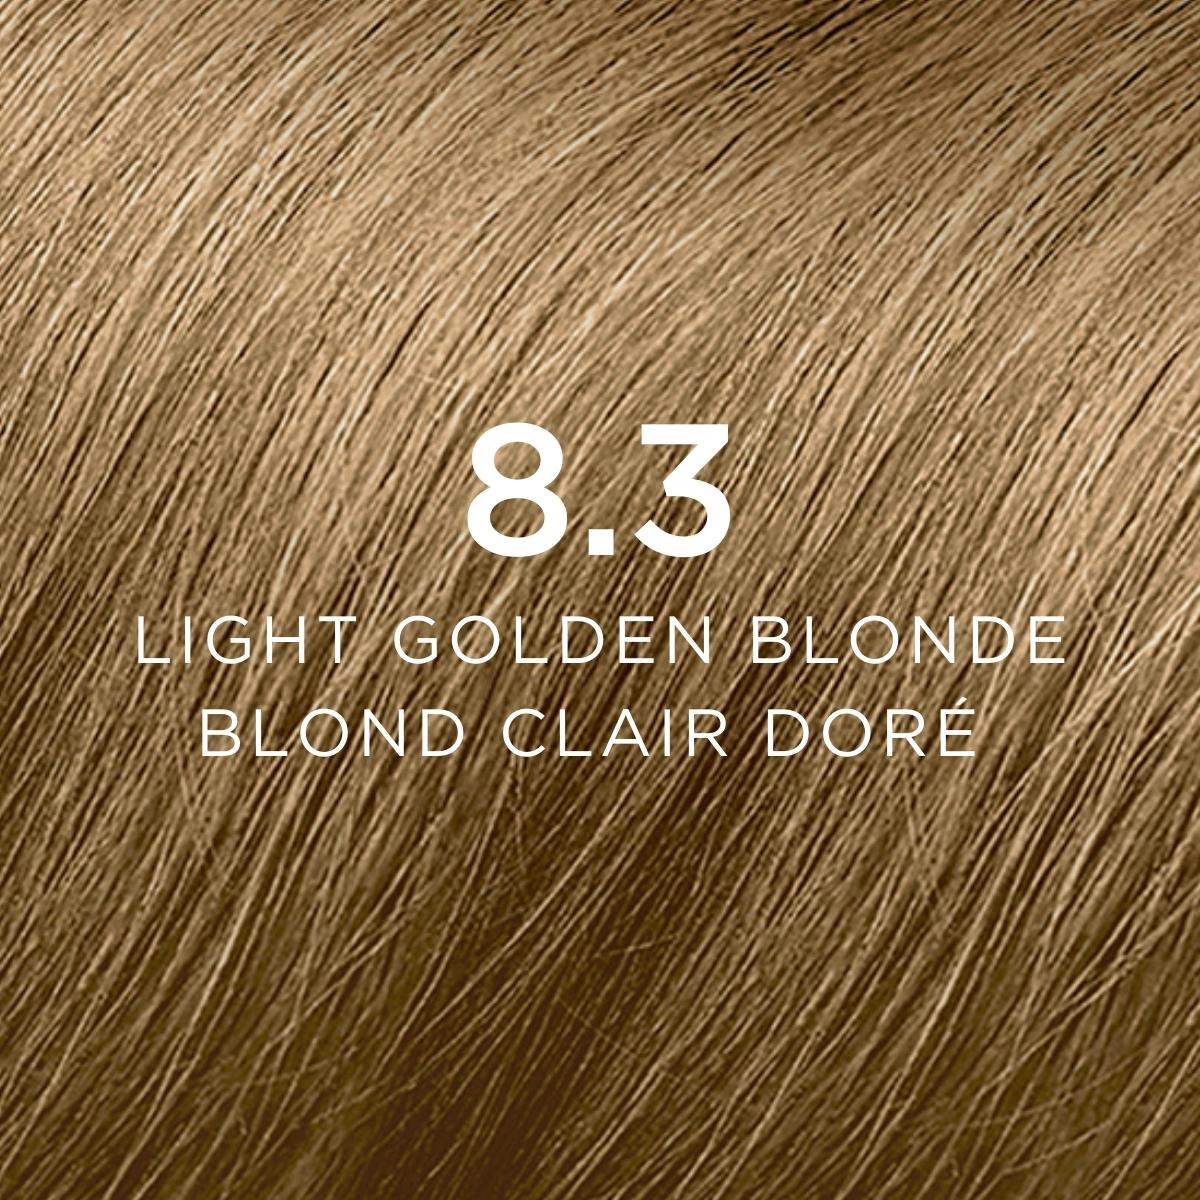 8.3 Blond clair doré